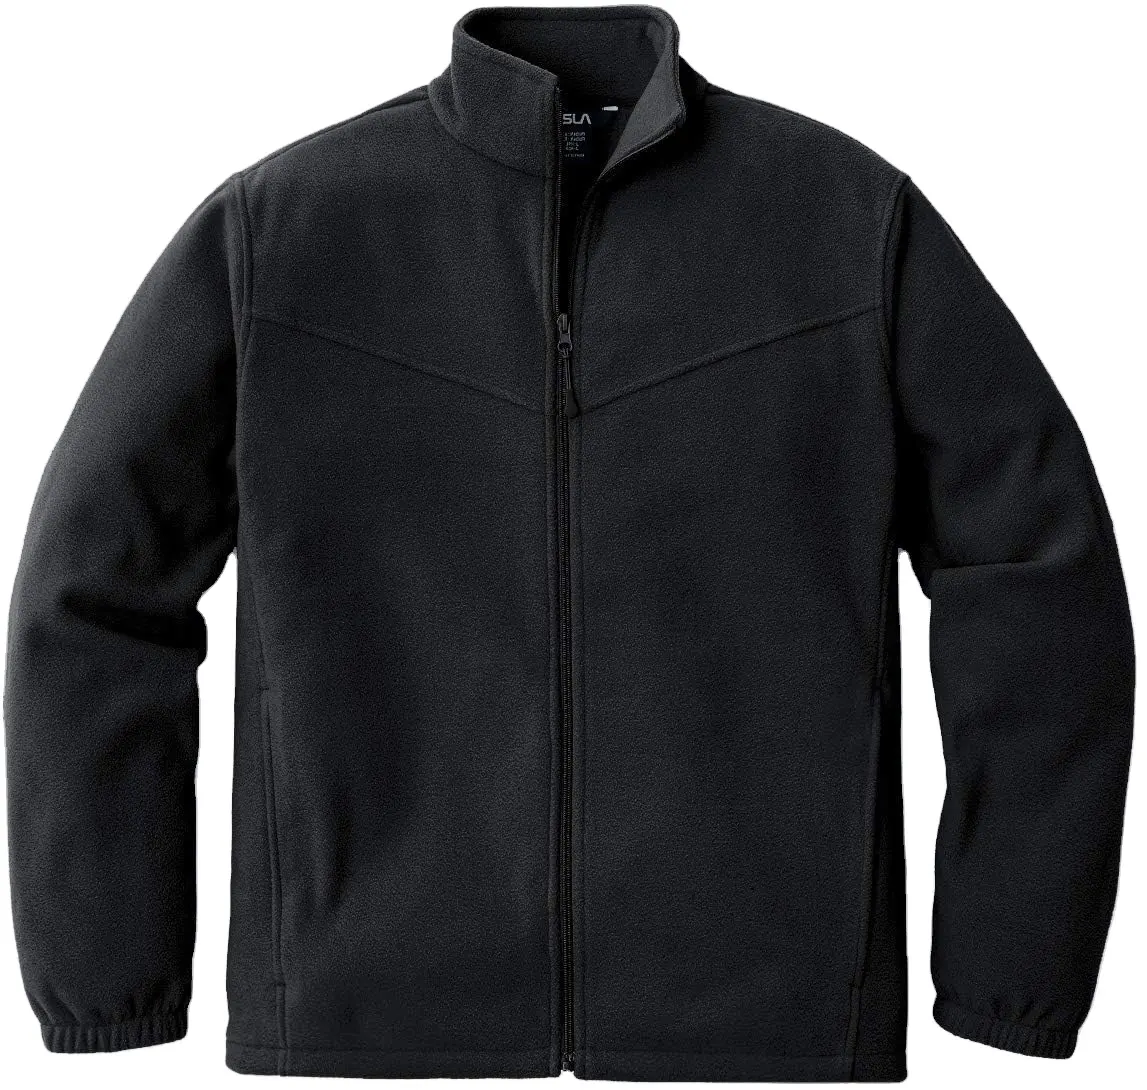 Men's Sherpa Jacket With Zip Pocket Cozy warmth Soft camofleece fabric OEM Breathable material Weatherproof polar fleece jackets